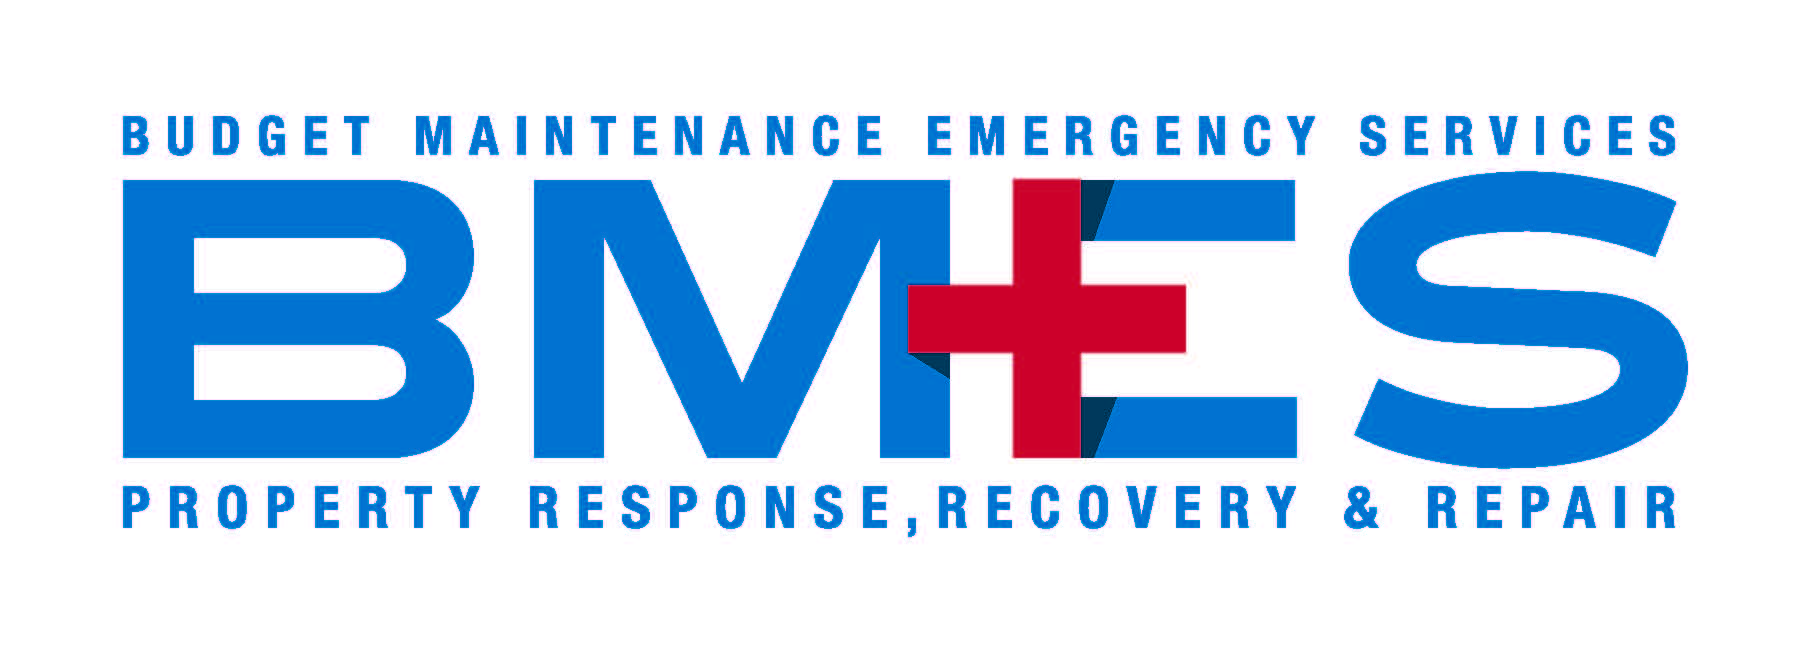 budget maintenance emergency services logo